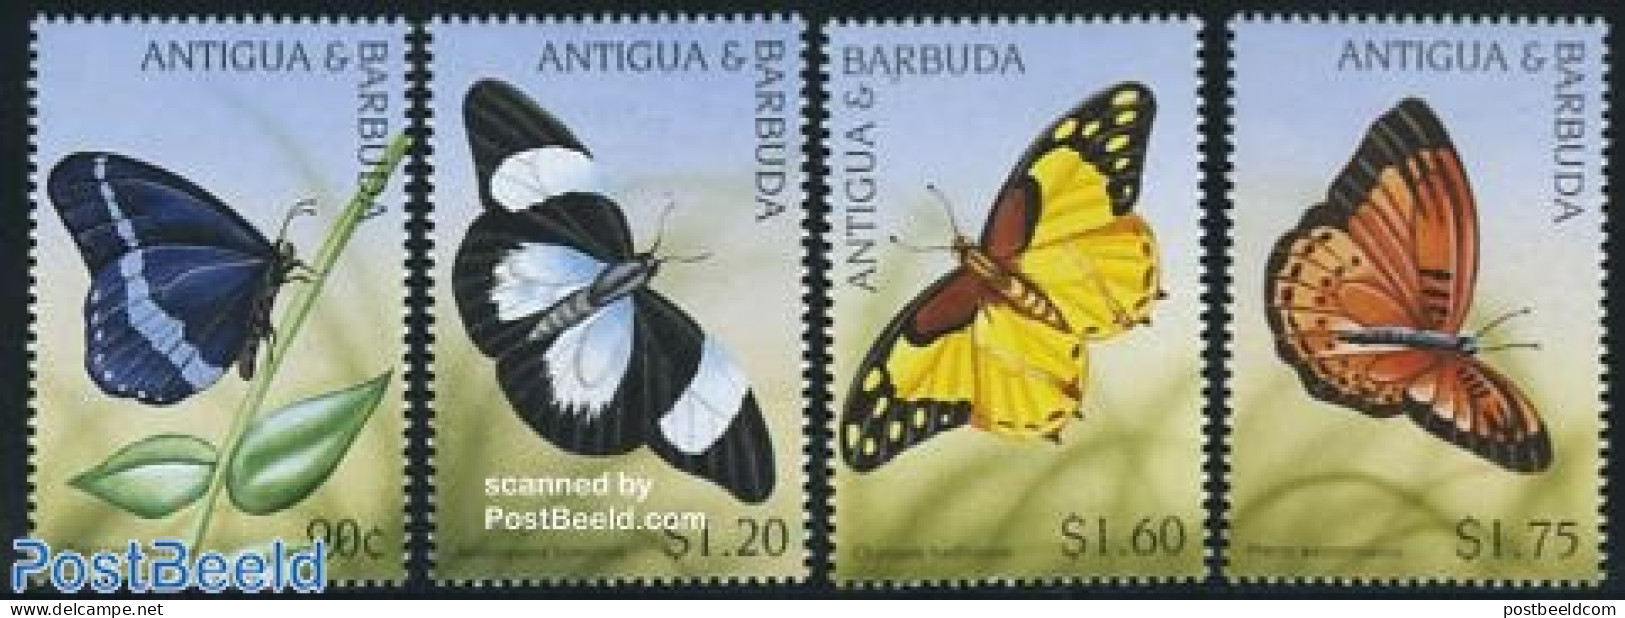 Antigua & Barbuda 1997 Butterflies 4v, Mint NH, Nature - Butterflies - Antigua And Barbuda (1981-...)